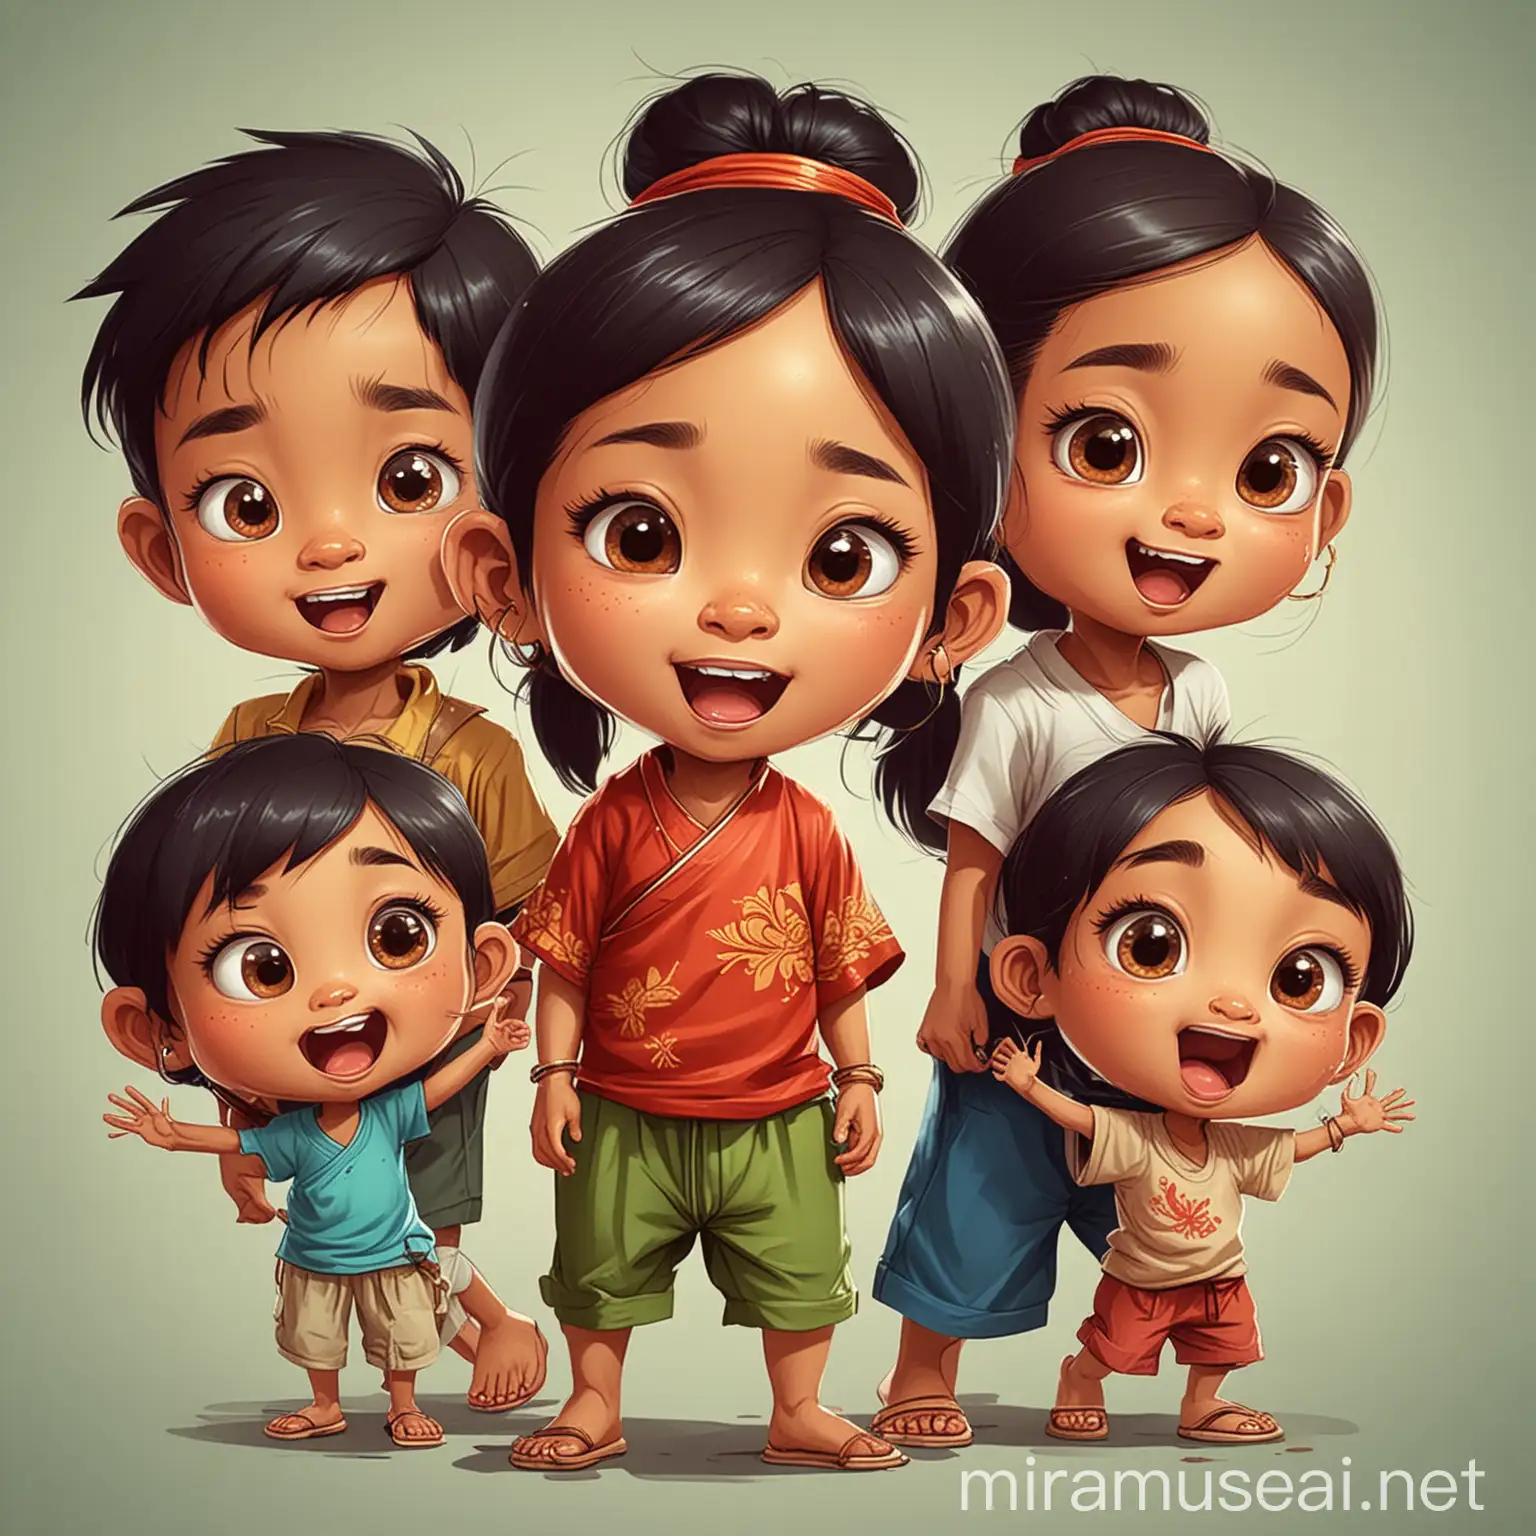 Dramatic Cartoon Illustration of Adorable Southeast Asian Children